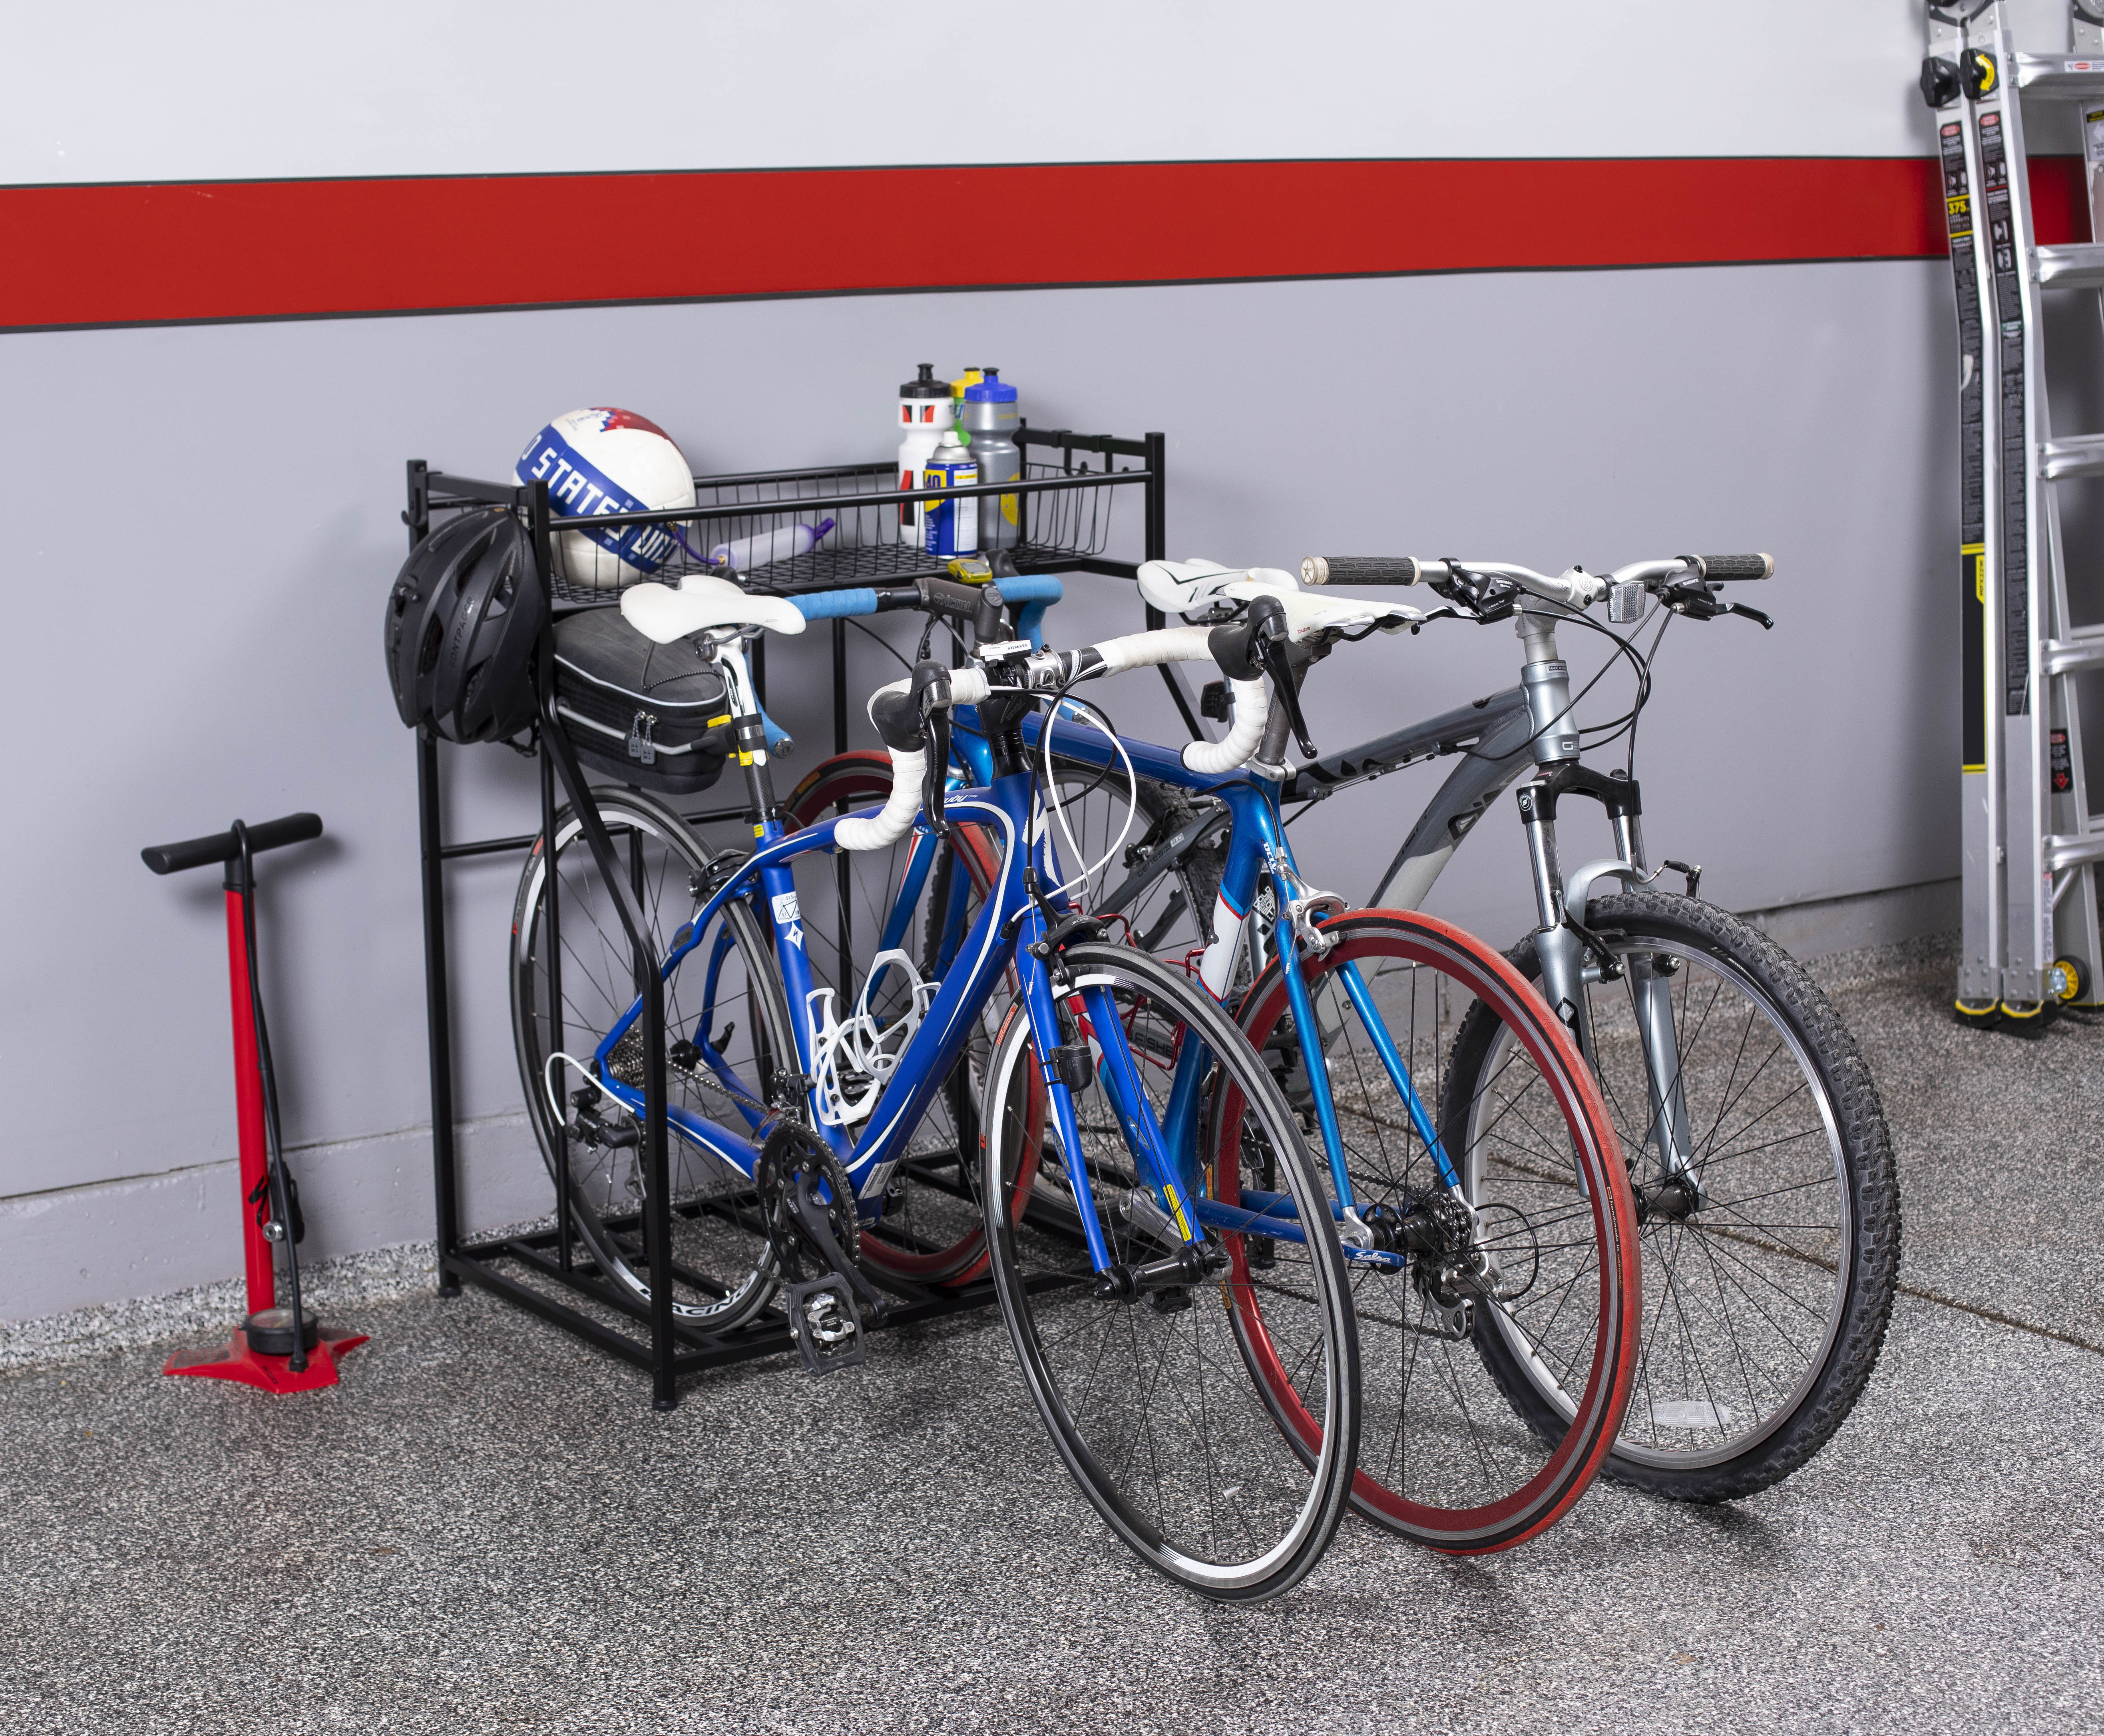 100lbs Heavy Duty Garage Storage Hooks Wall Mounted Utility for Bike  Ladders US